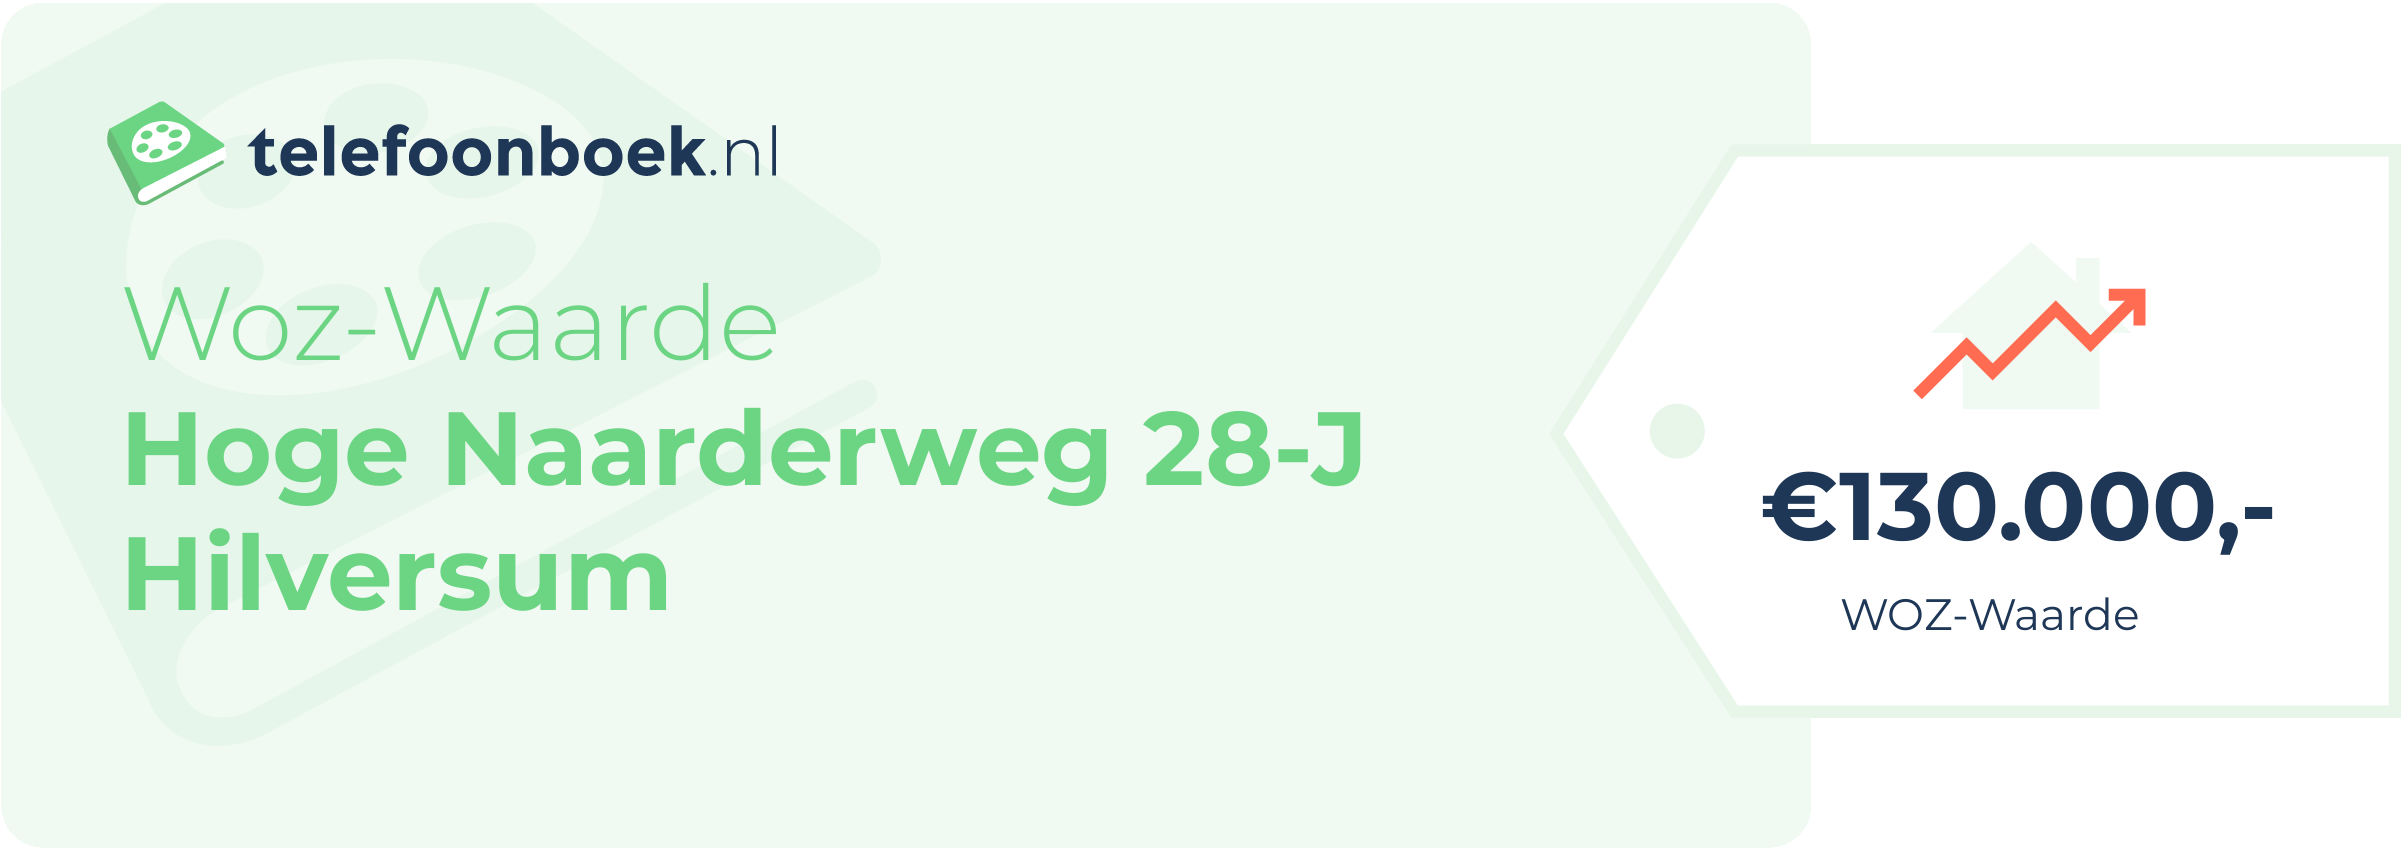 WOZ-waarde Hoge Naarderweg 28-J Hilversum